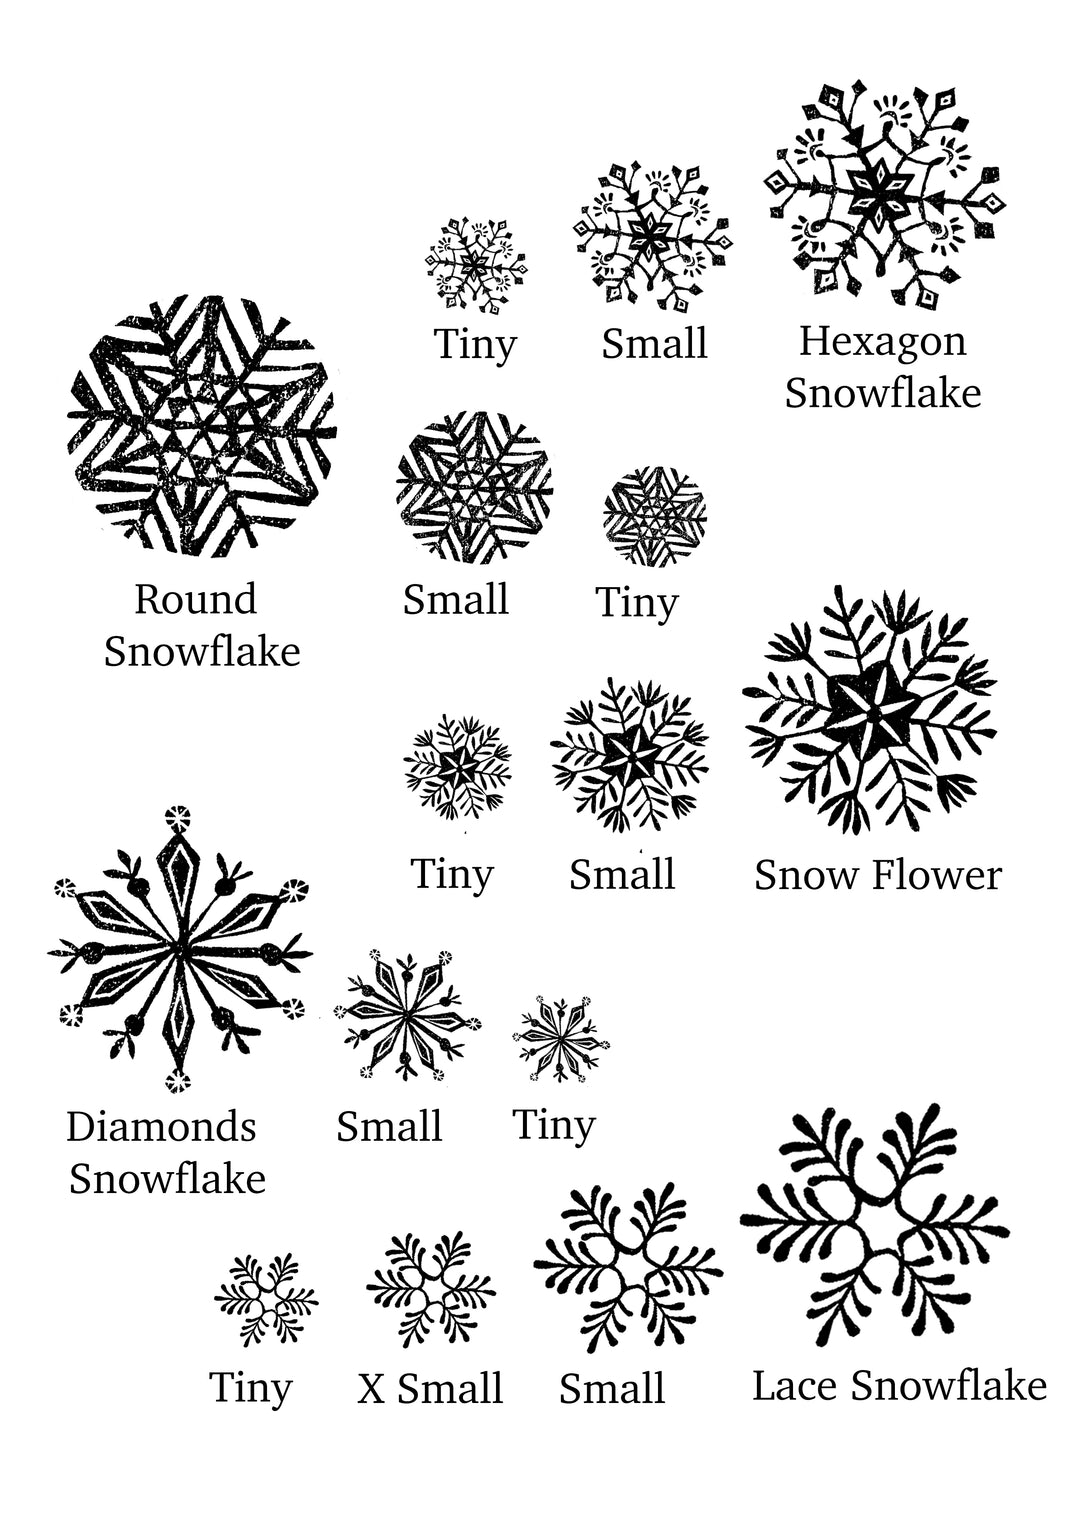 Snowflake Tree and Snowflakes - Noolibird